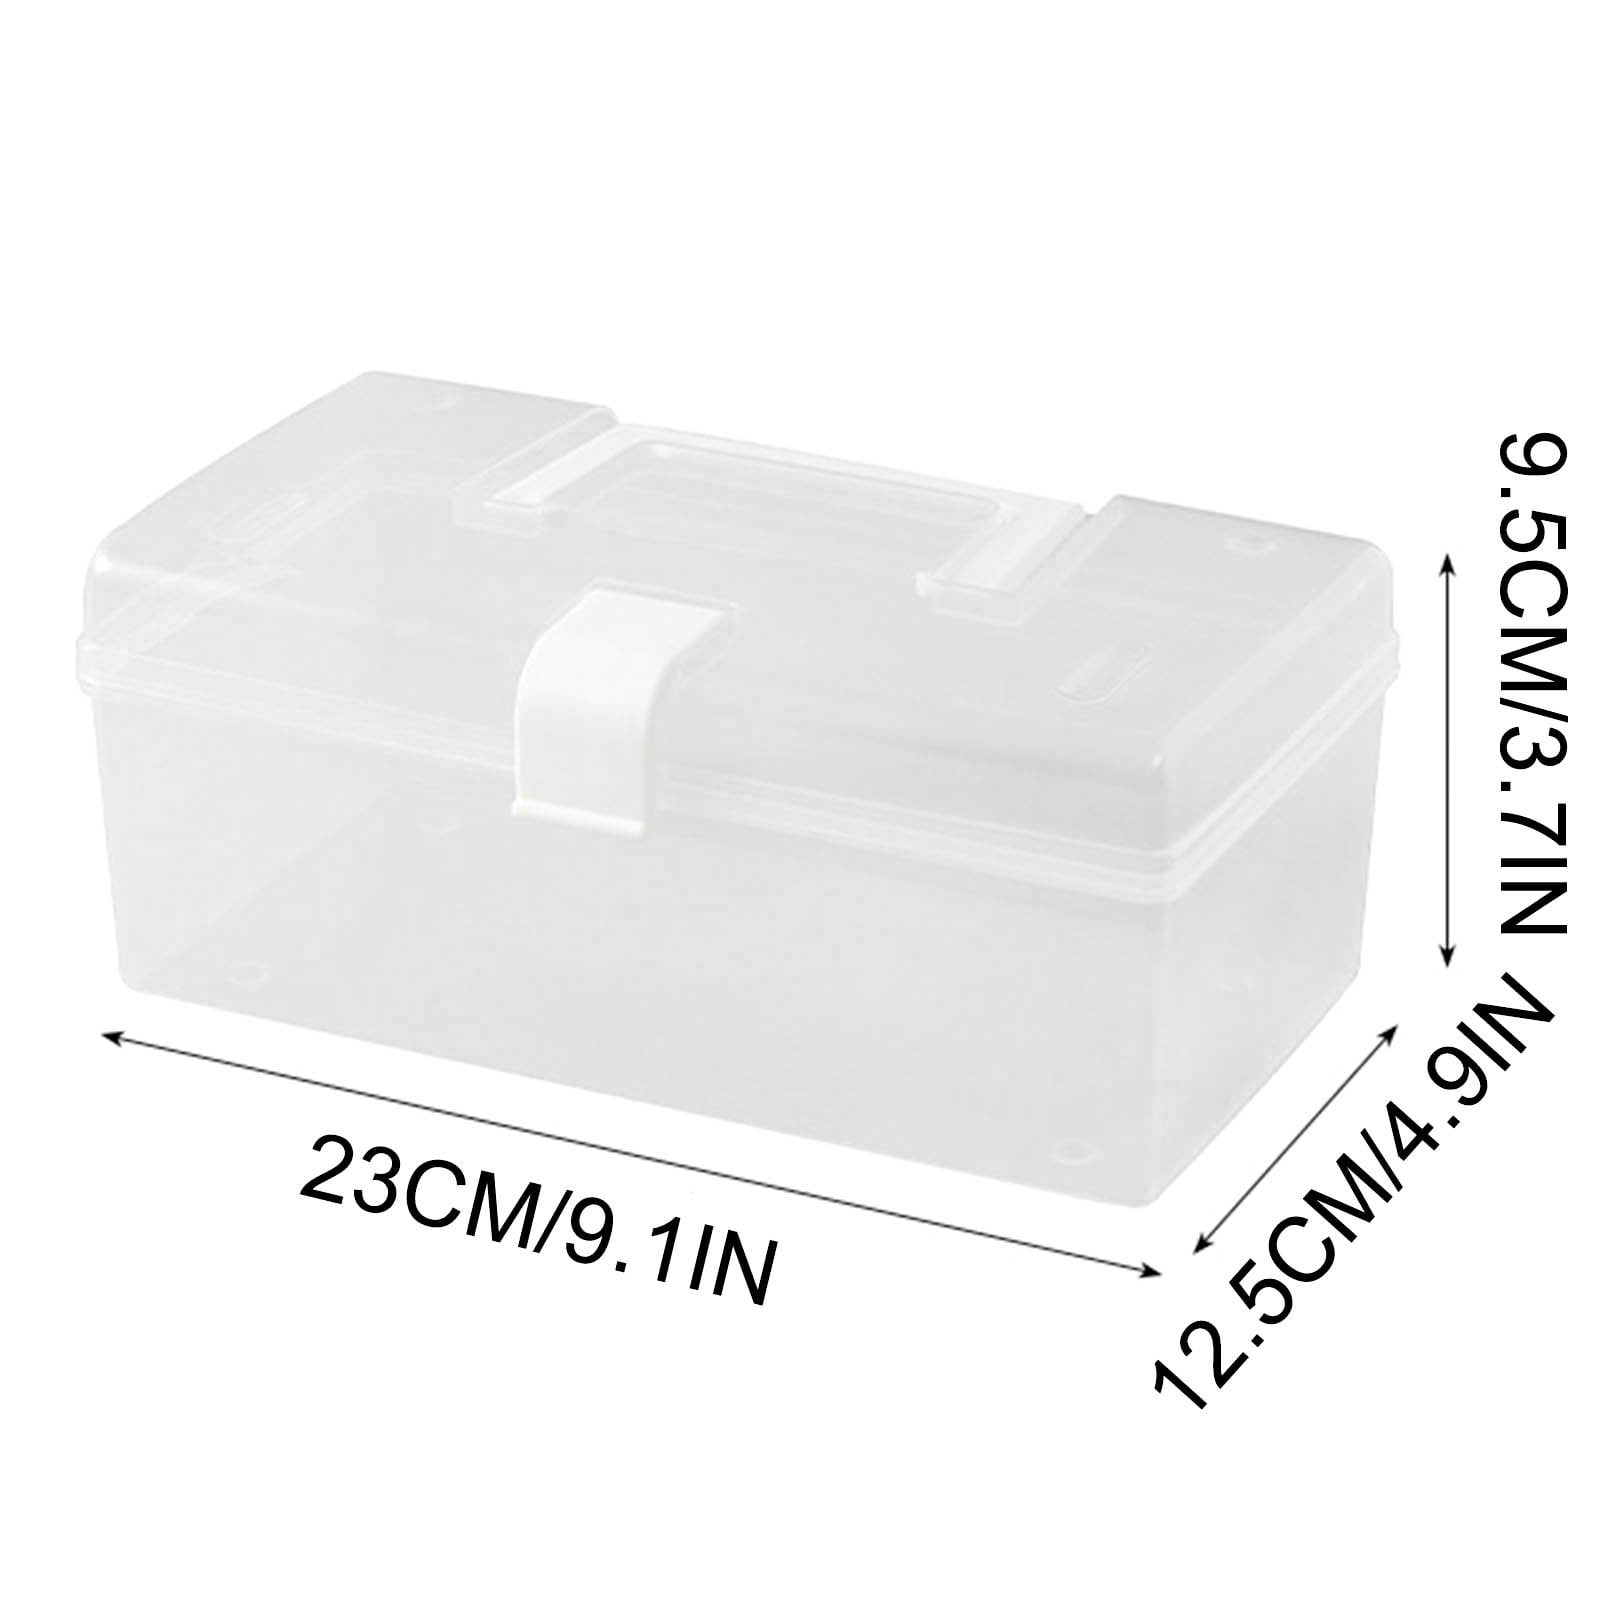 EJWQWQE Lock Box For Safe Medication Storage, Large Refrigeor